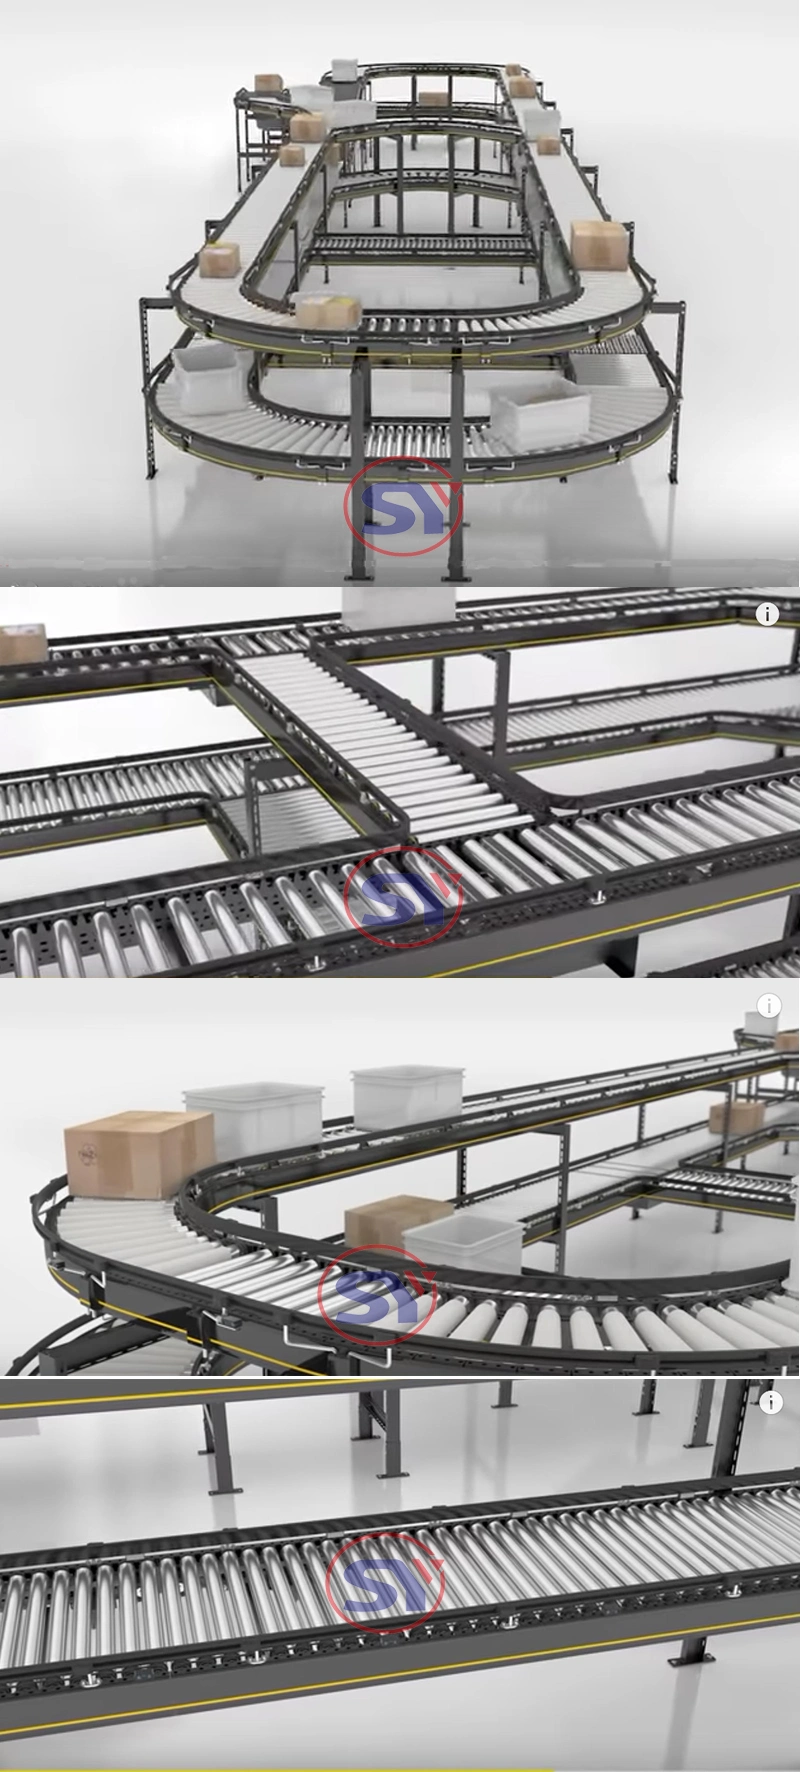 Horizontal Mobility Parcel Sortation Manual Roller Conveyor for Packages